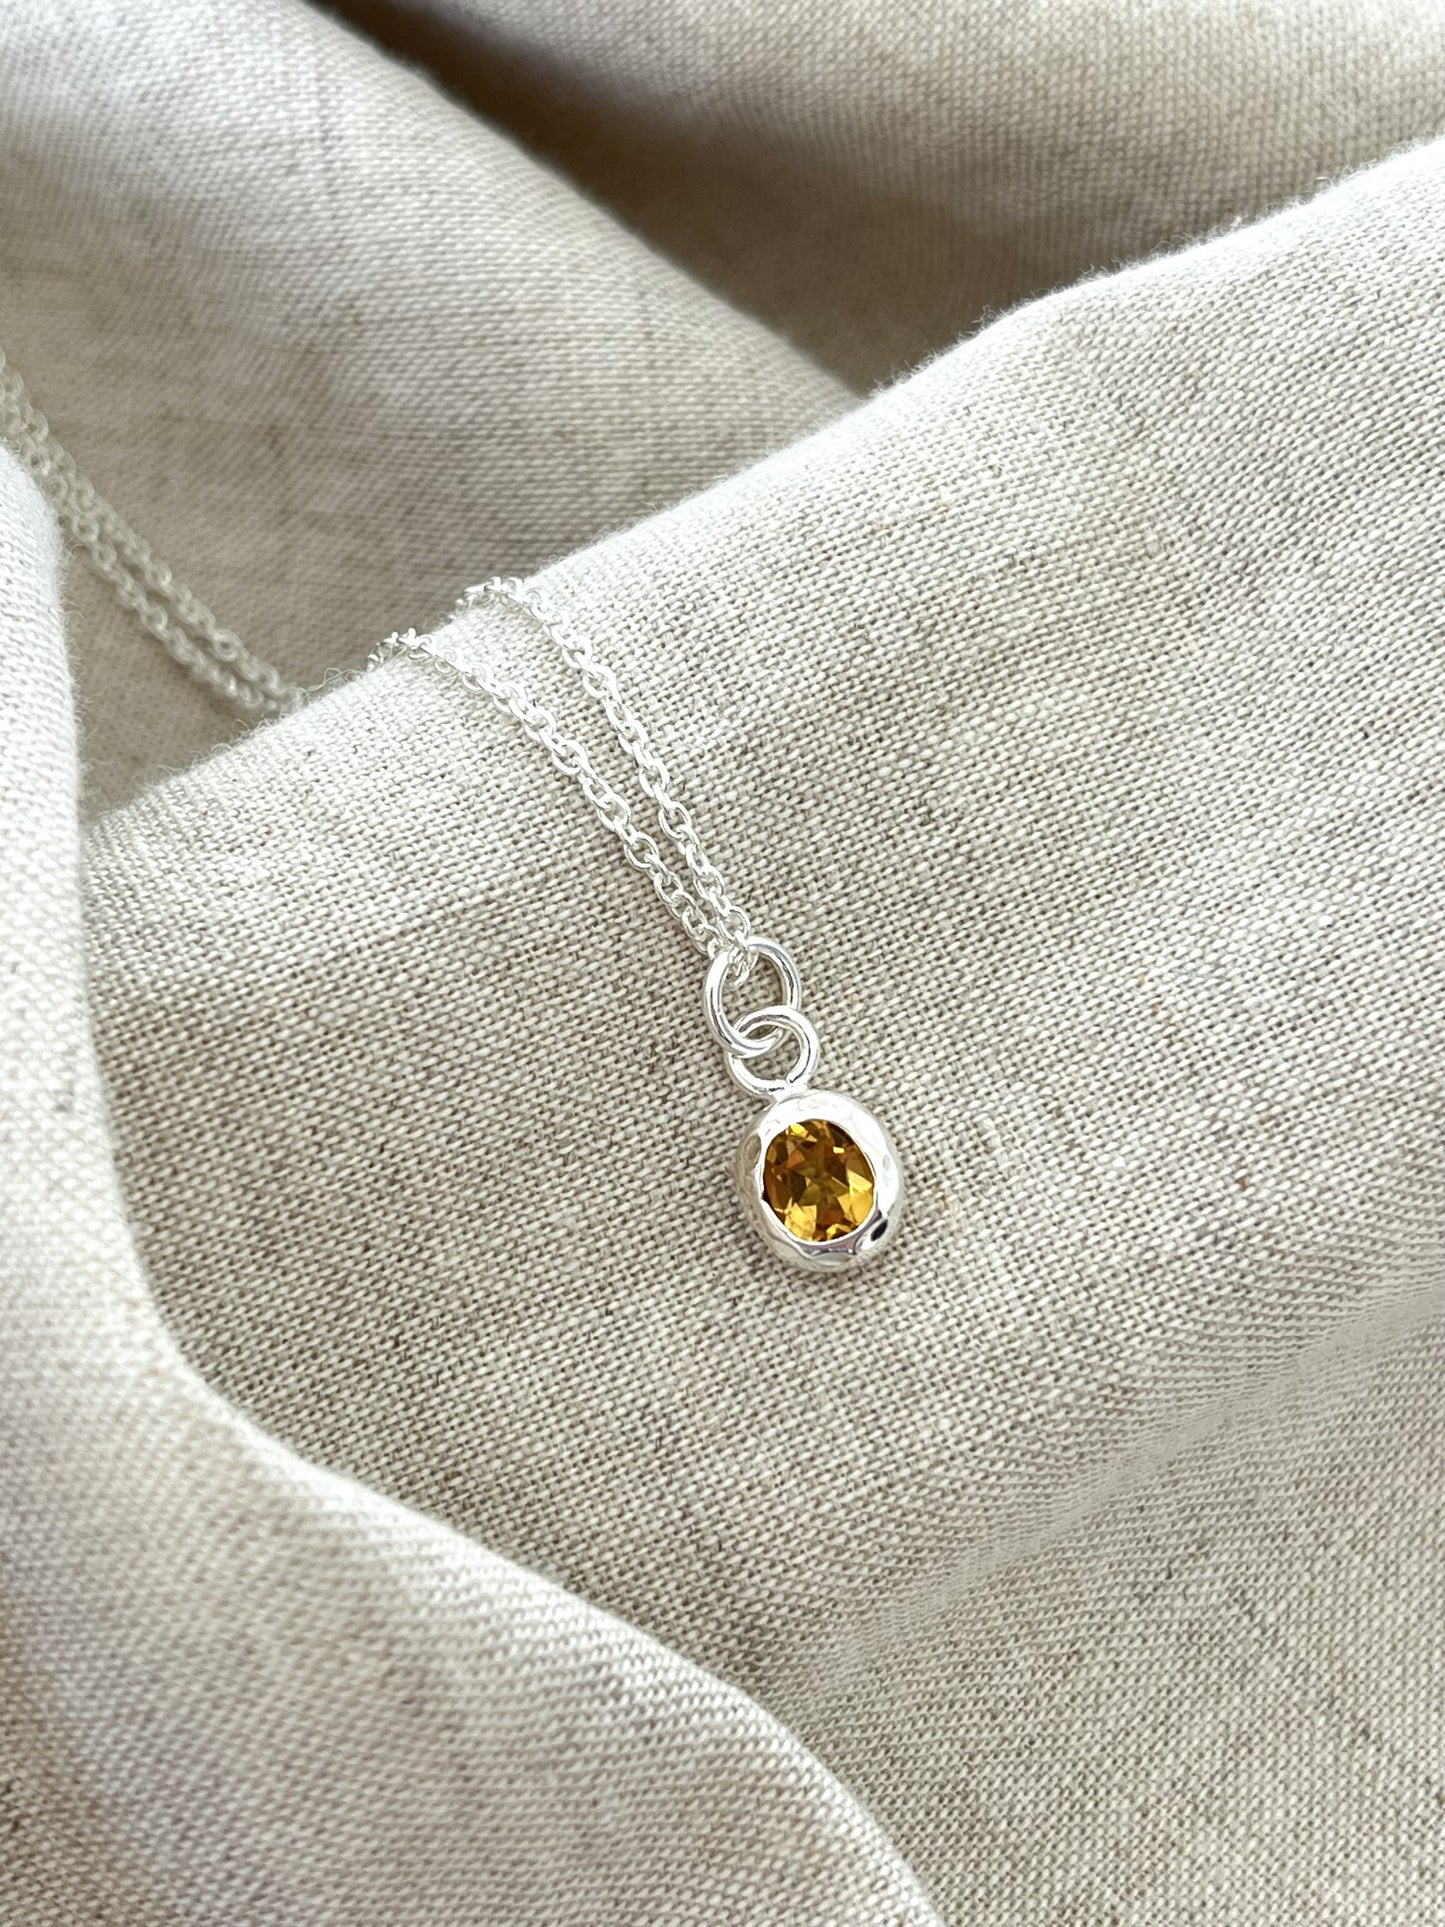 Citrine Oval Gemstone & Silver Necklace - golden yellow citrine